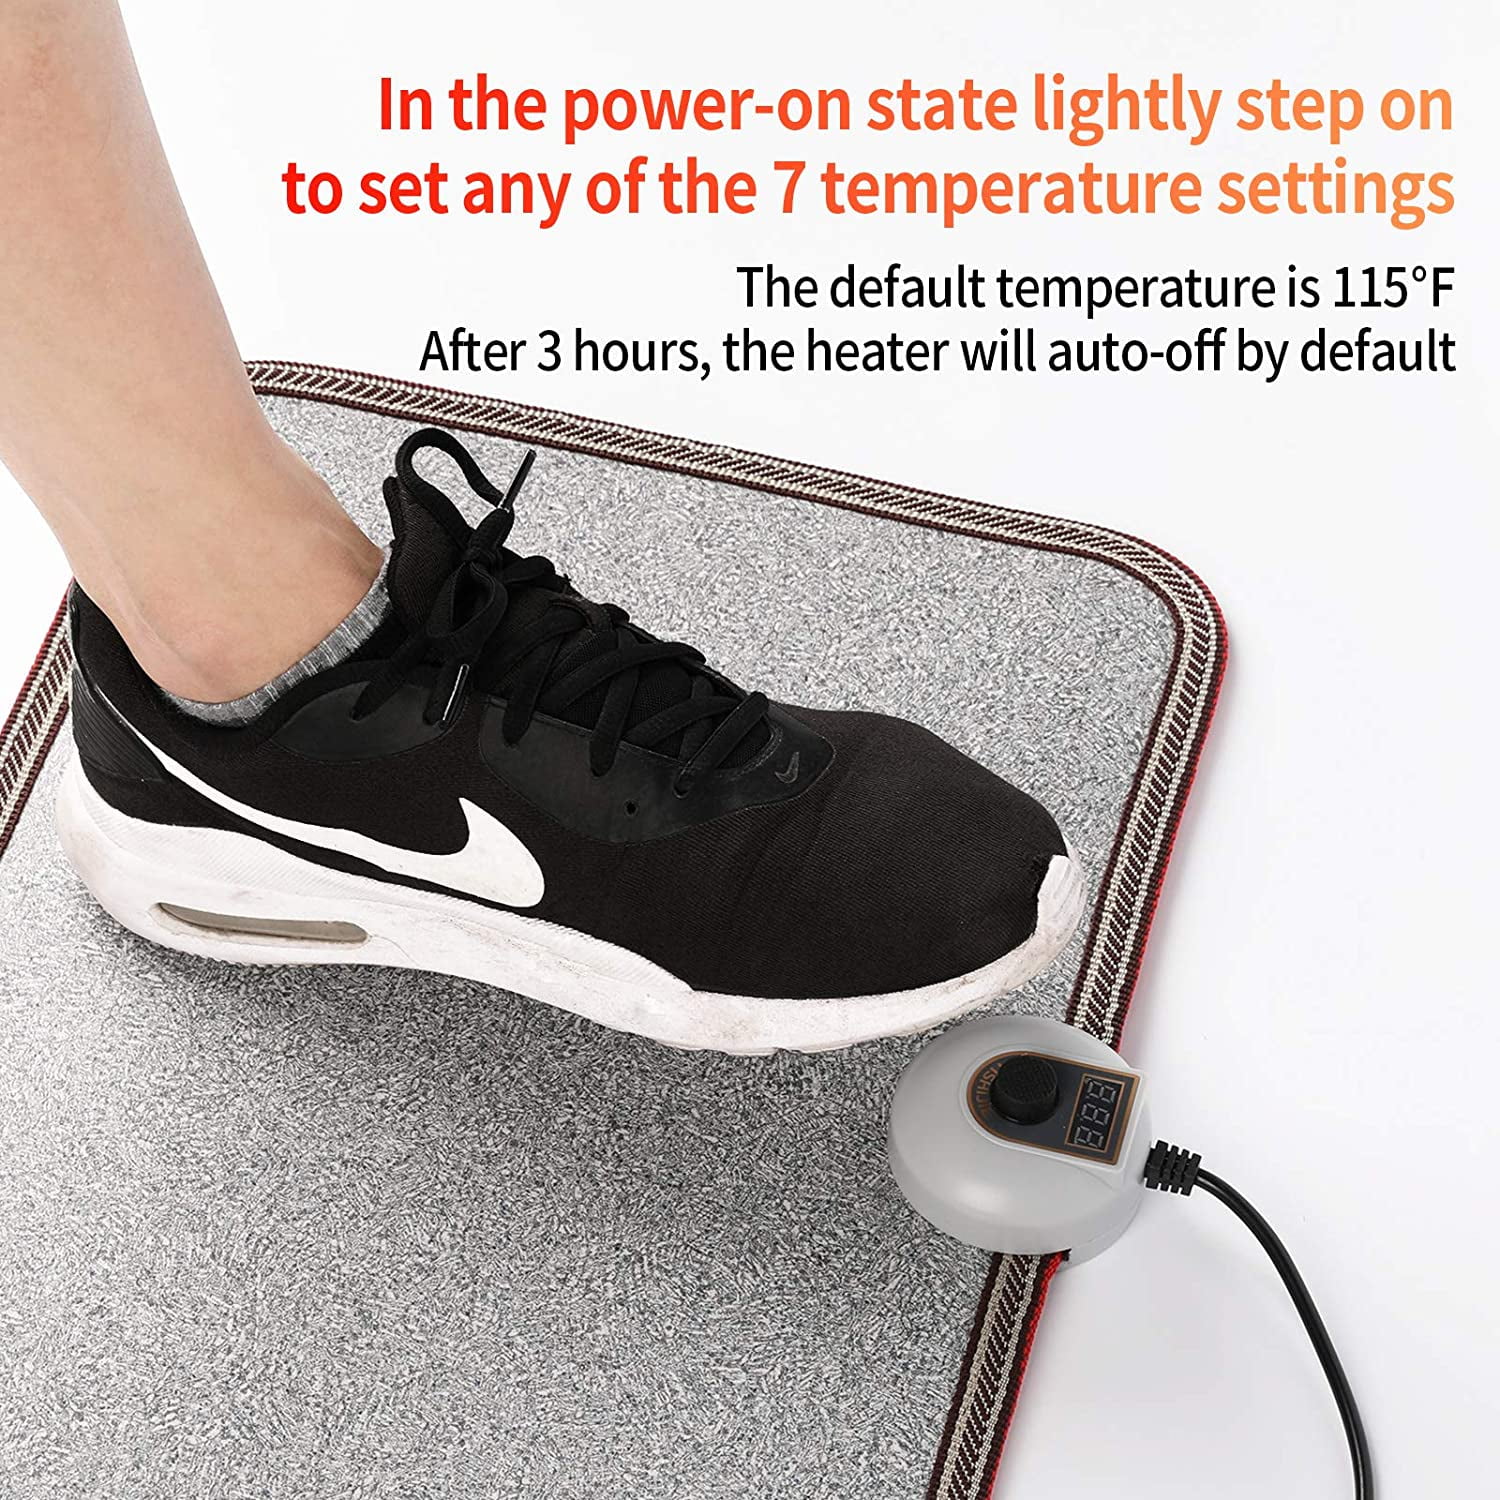 OLYDON Electric Heated Floor Mats Under Desk, Heated Foot Warmer - 110v